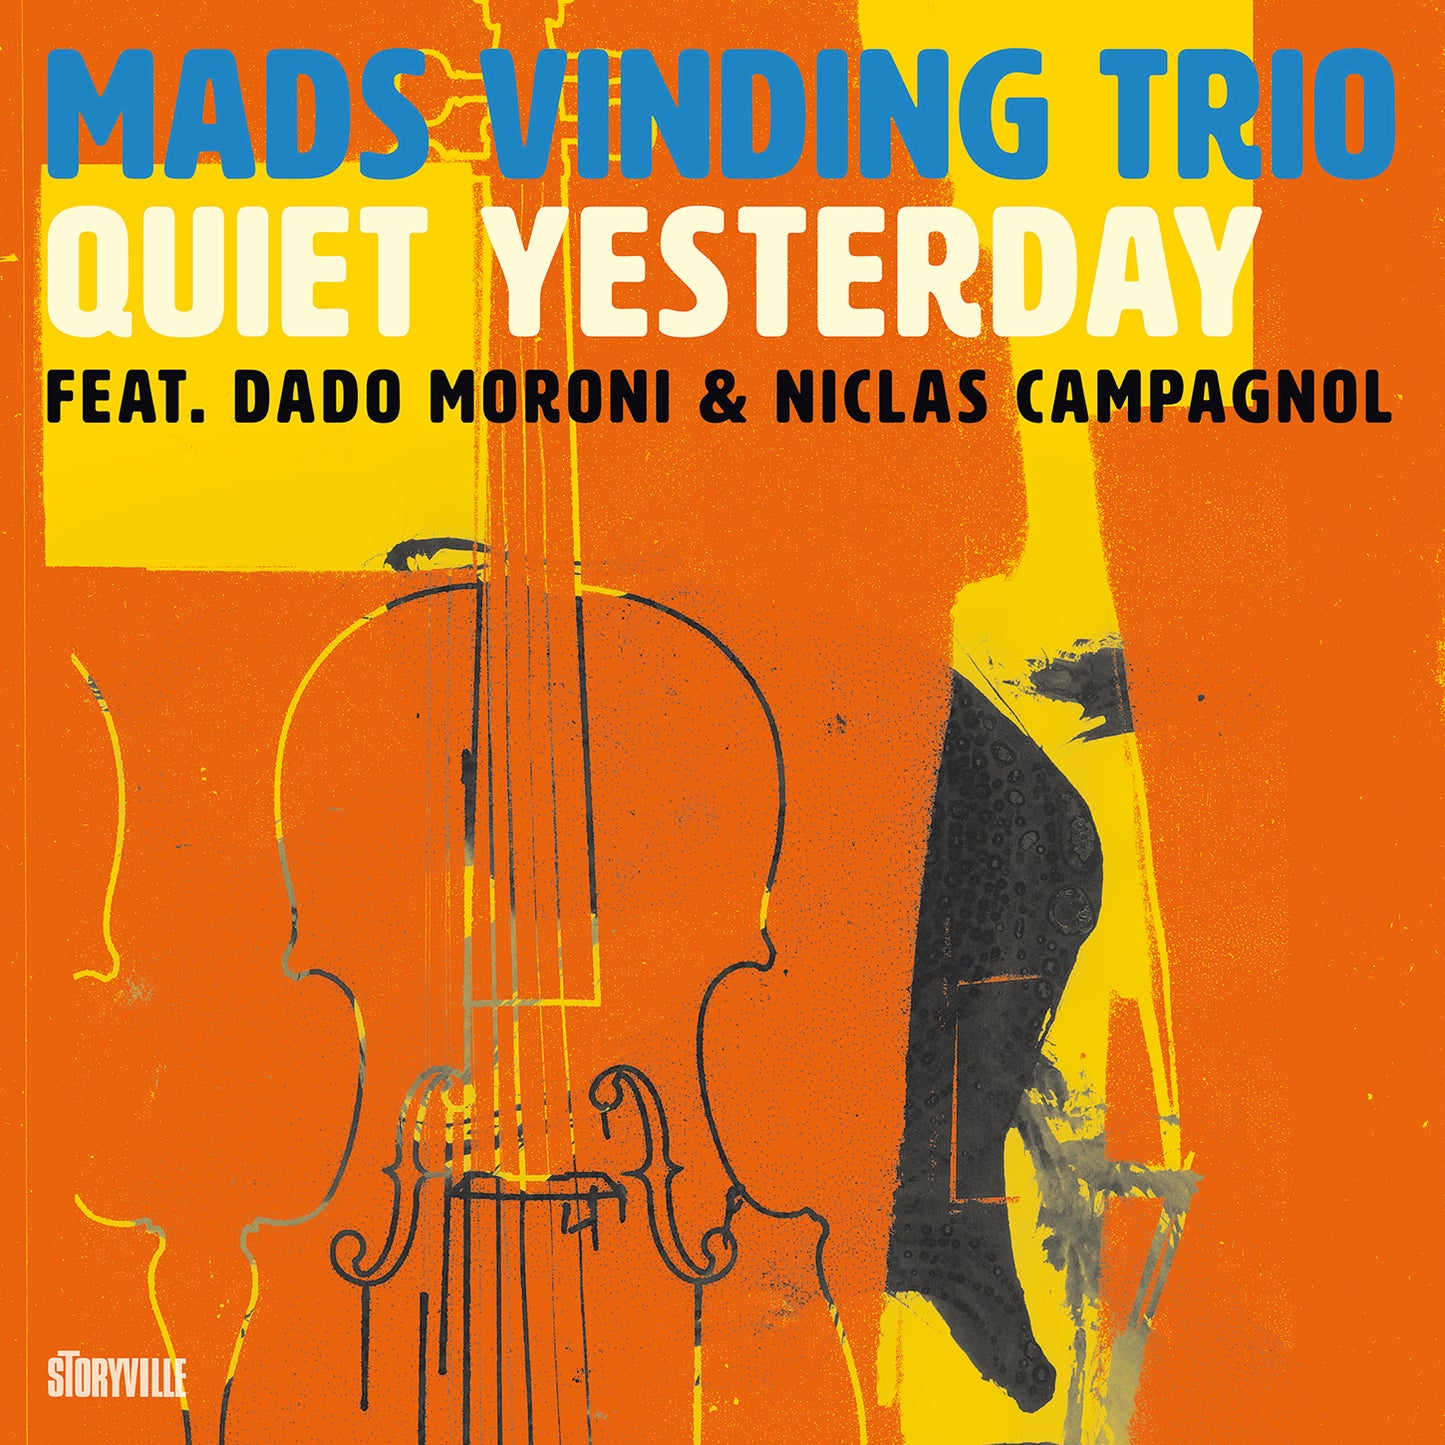 Quiet Yesterday  Mads Vinding Trio, Dado Moroni, Niclas Campagnol